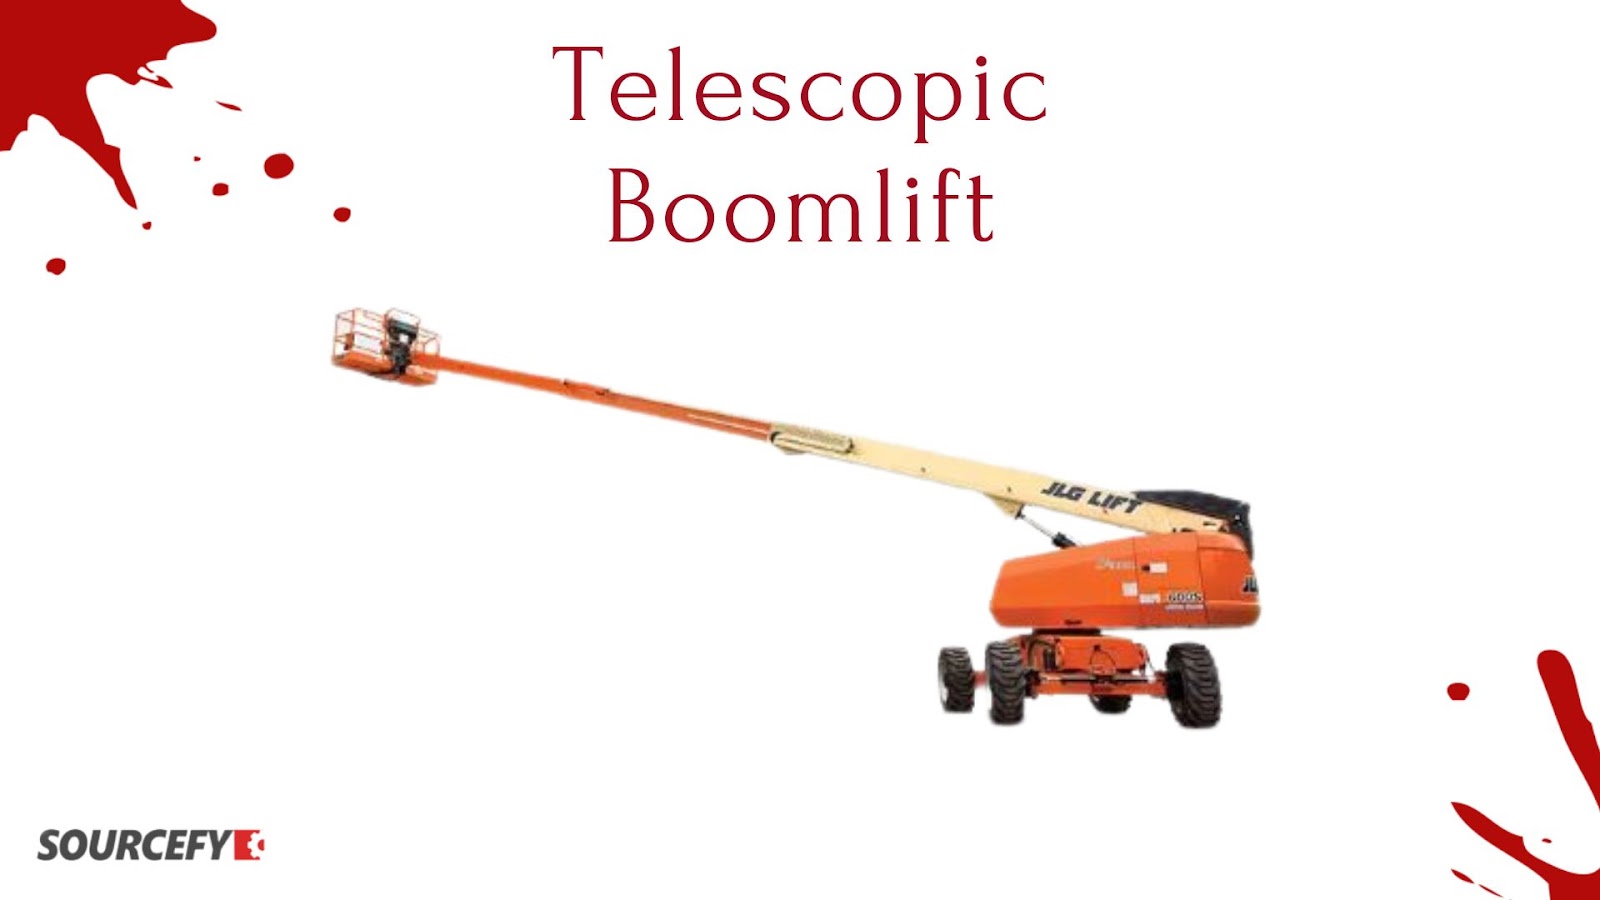 Telescopic Boomlift